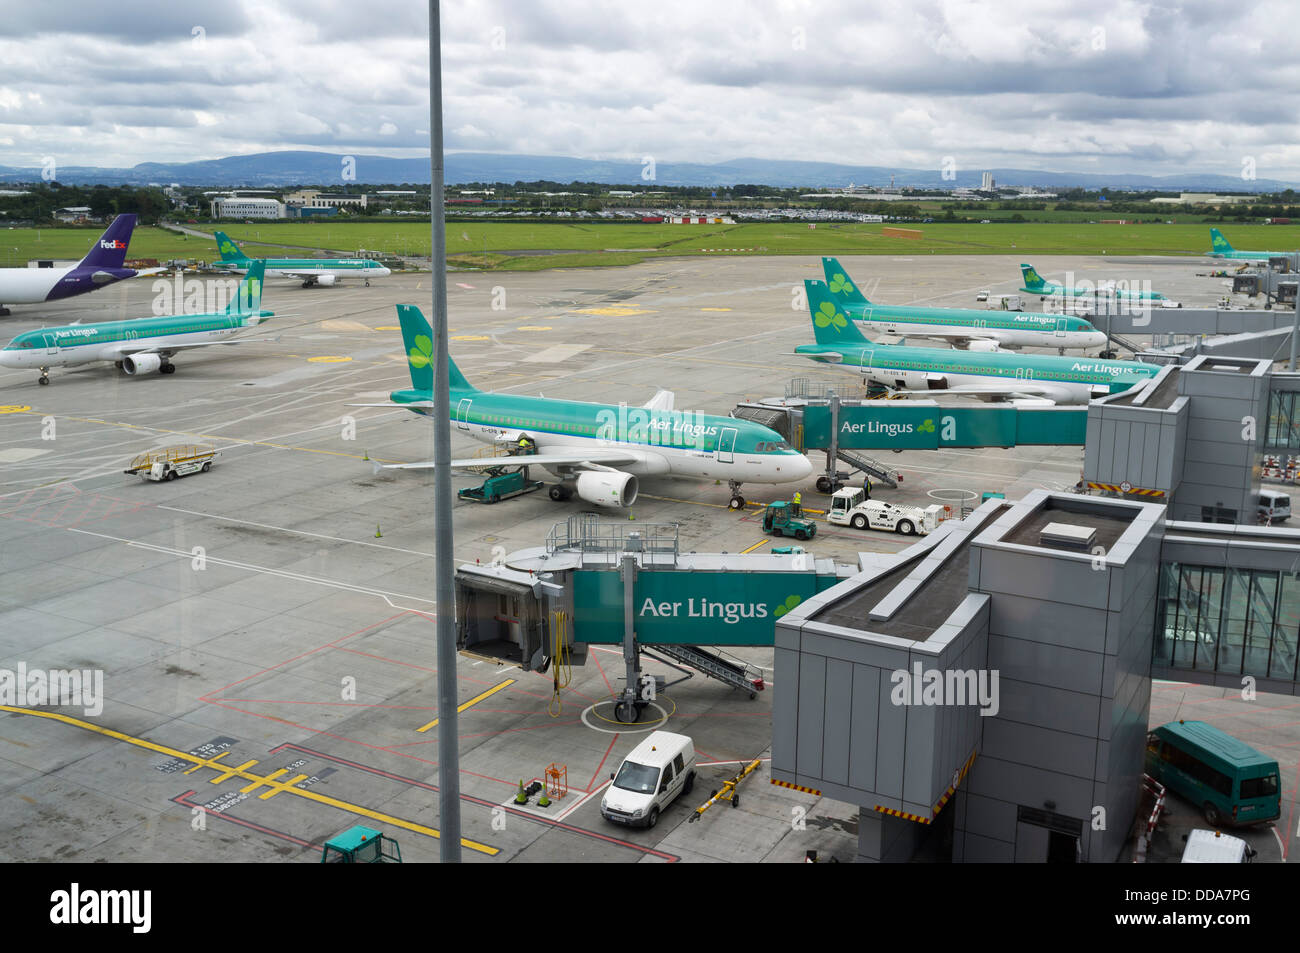 Aer lingus aircraft parked on the tarmac at Dublin airport, Terminal 2, ireland. Stock Photo